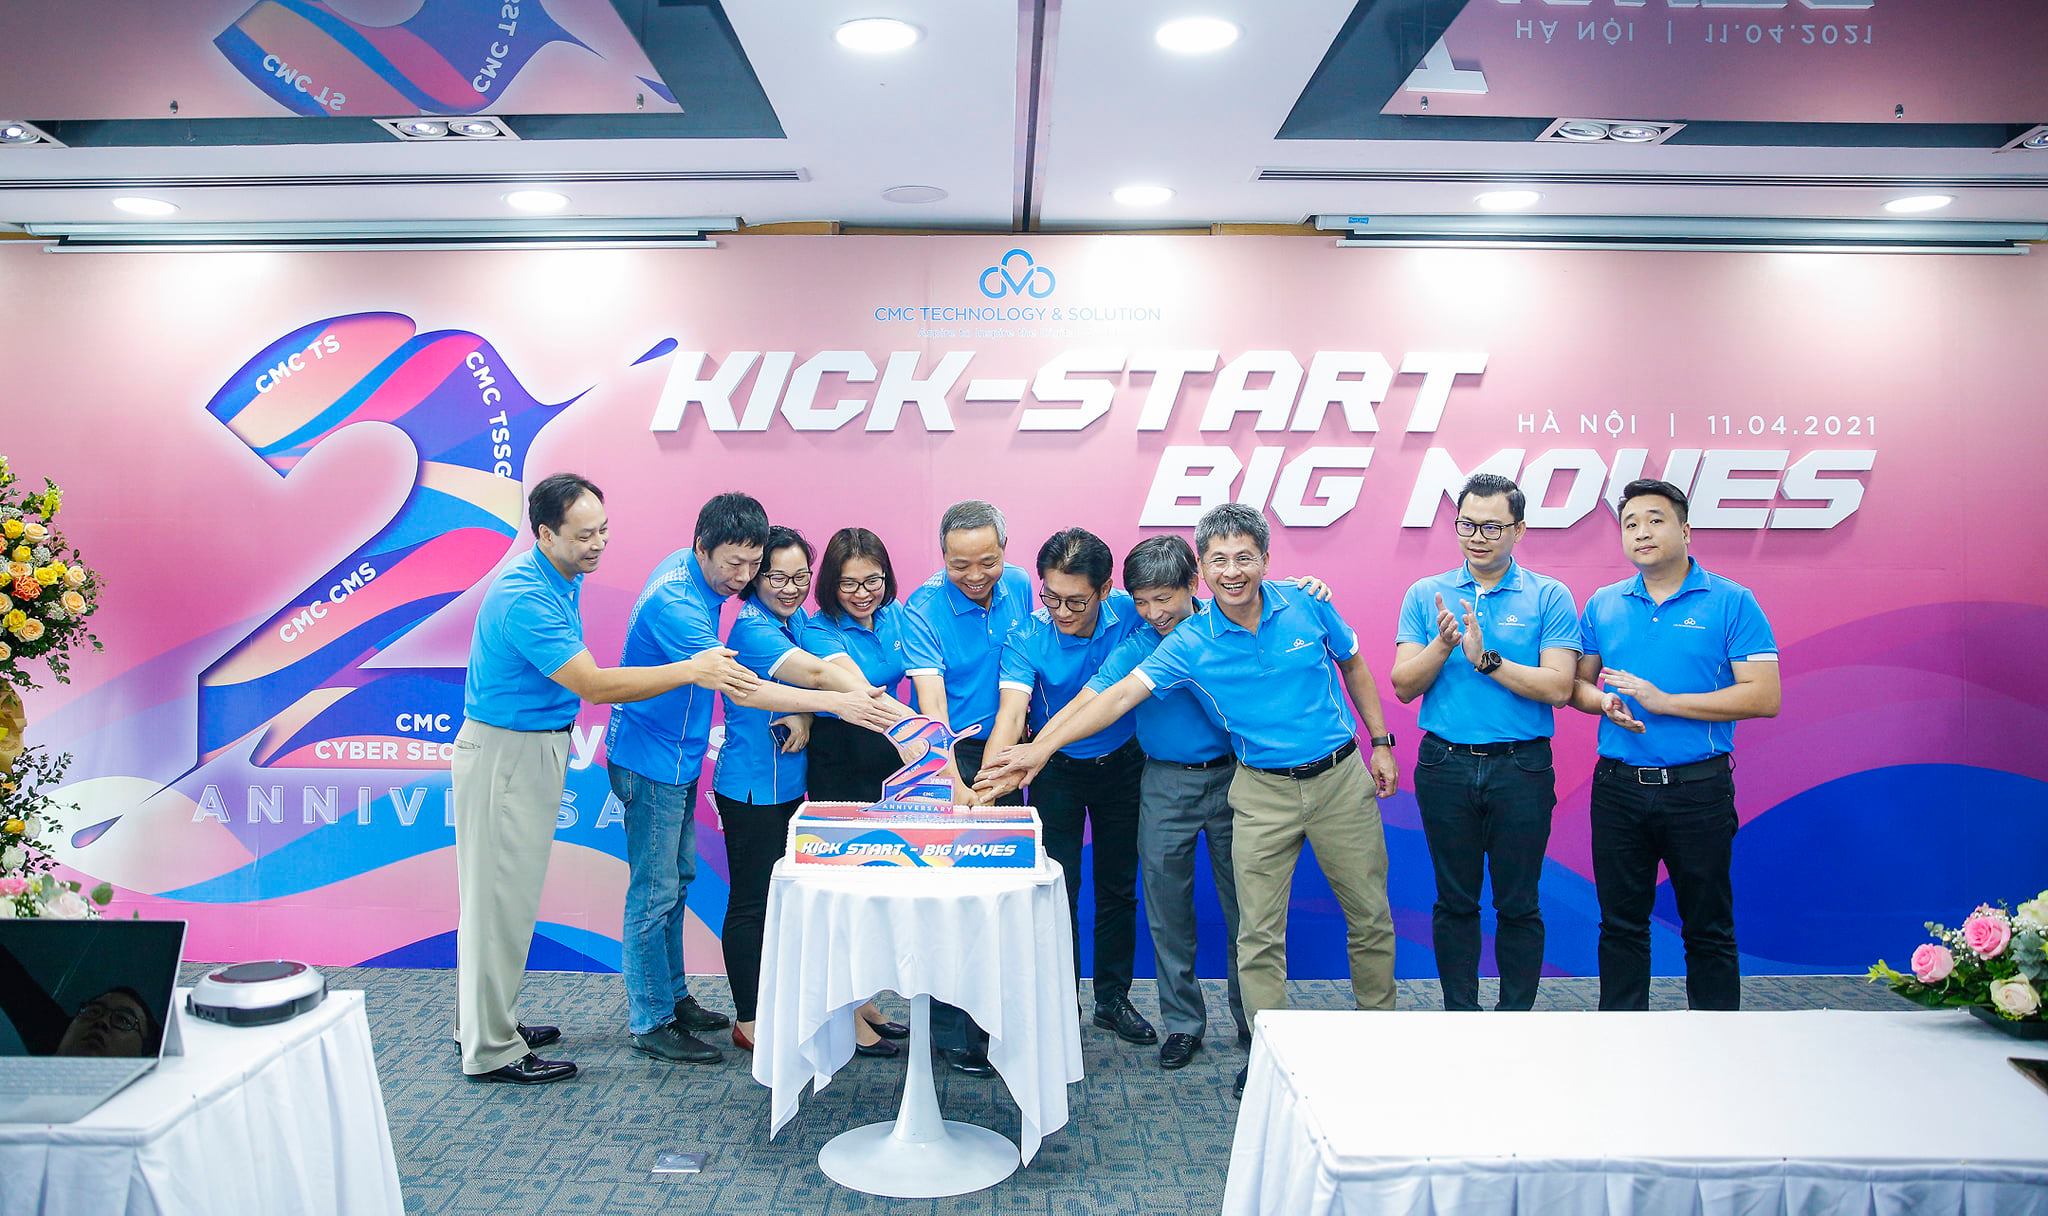 The 2nd Anniversary of CMC TS: Kick-start Big Moves